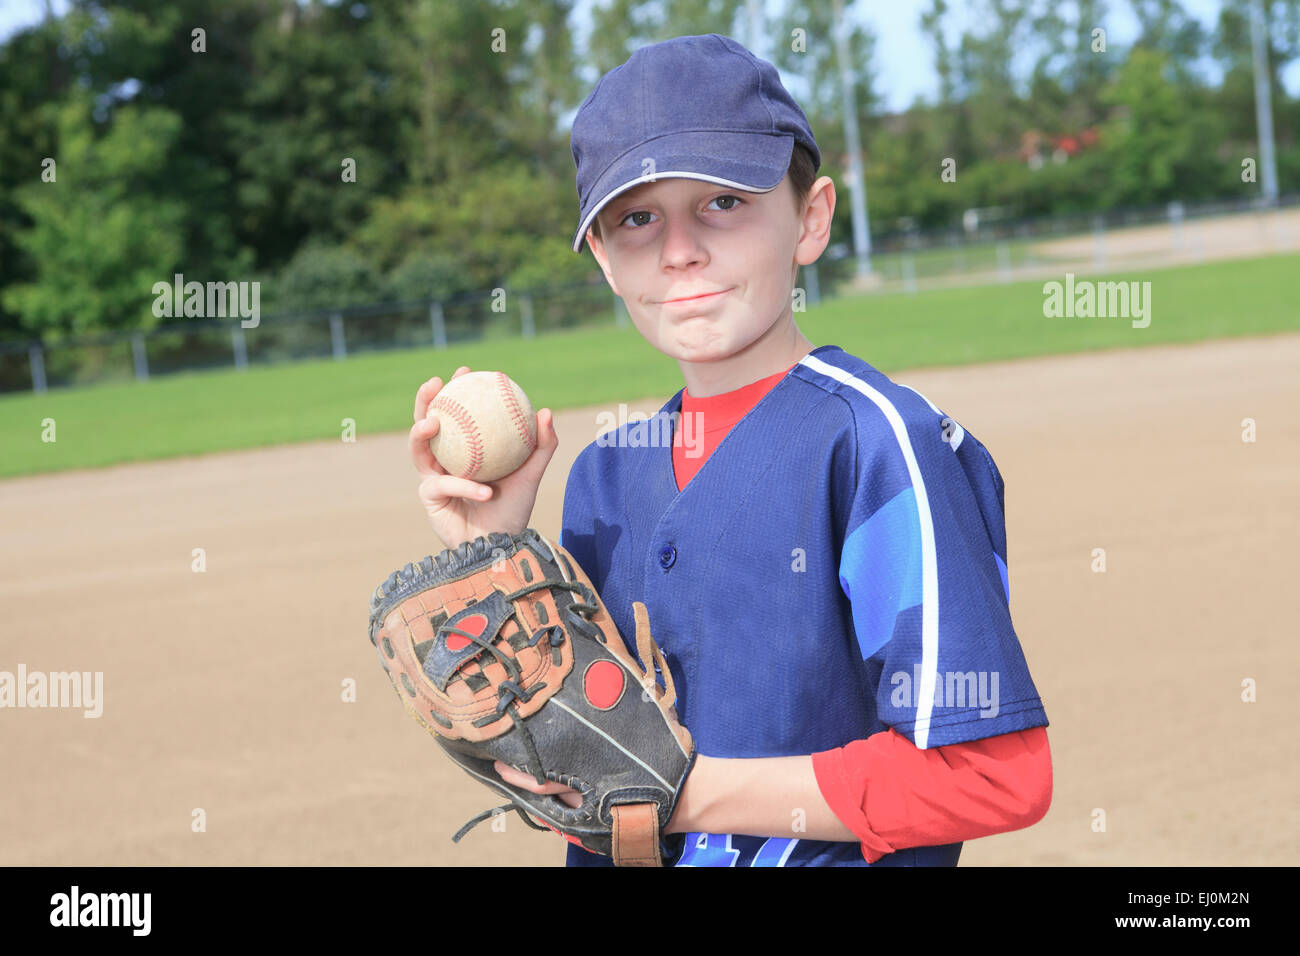 A child baseball pitchen on the field Stock Photo